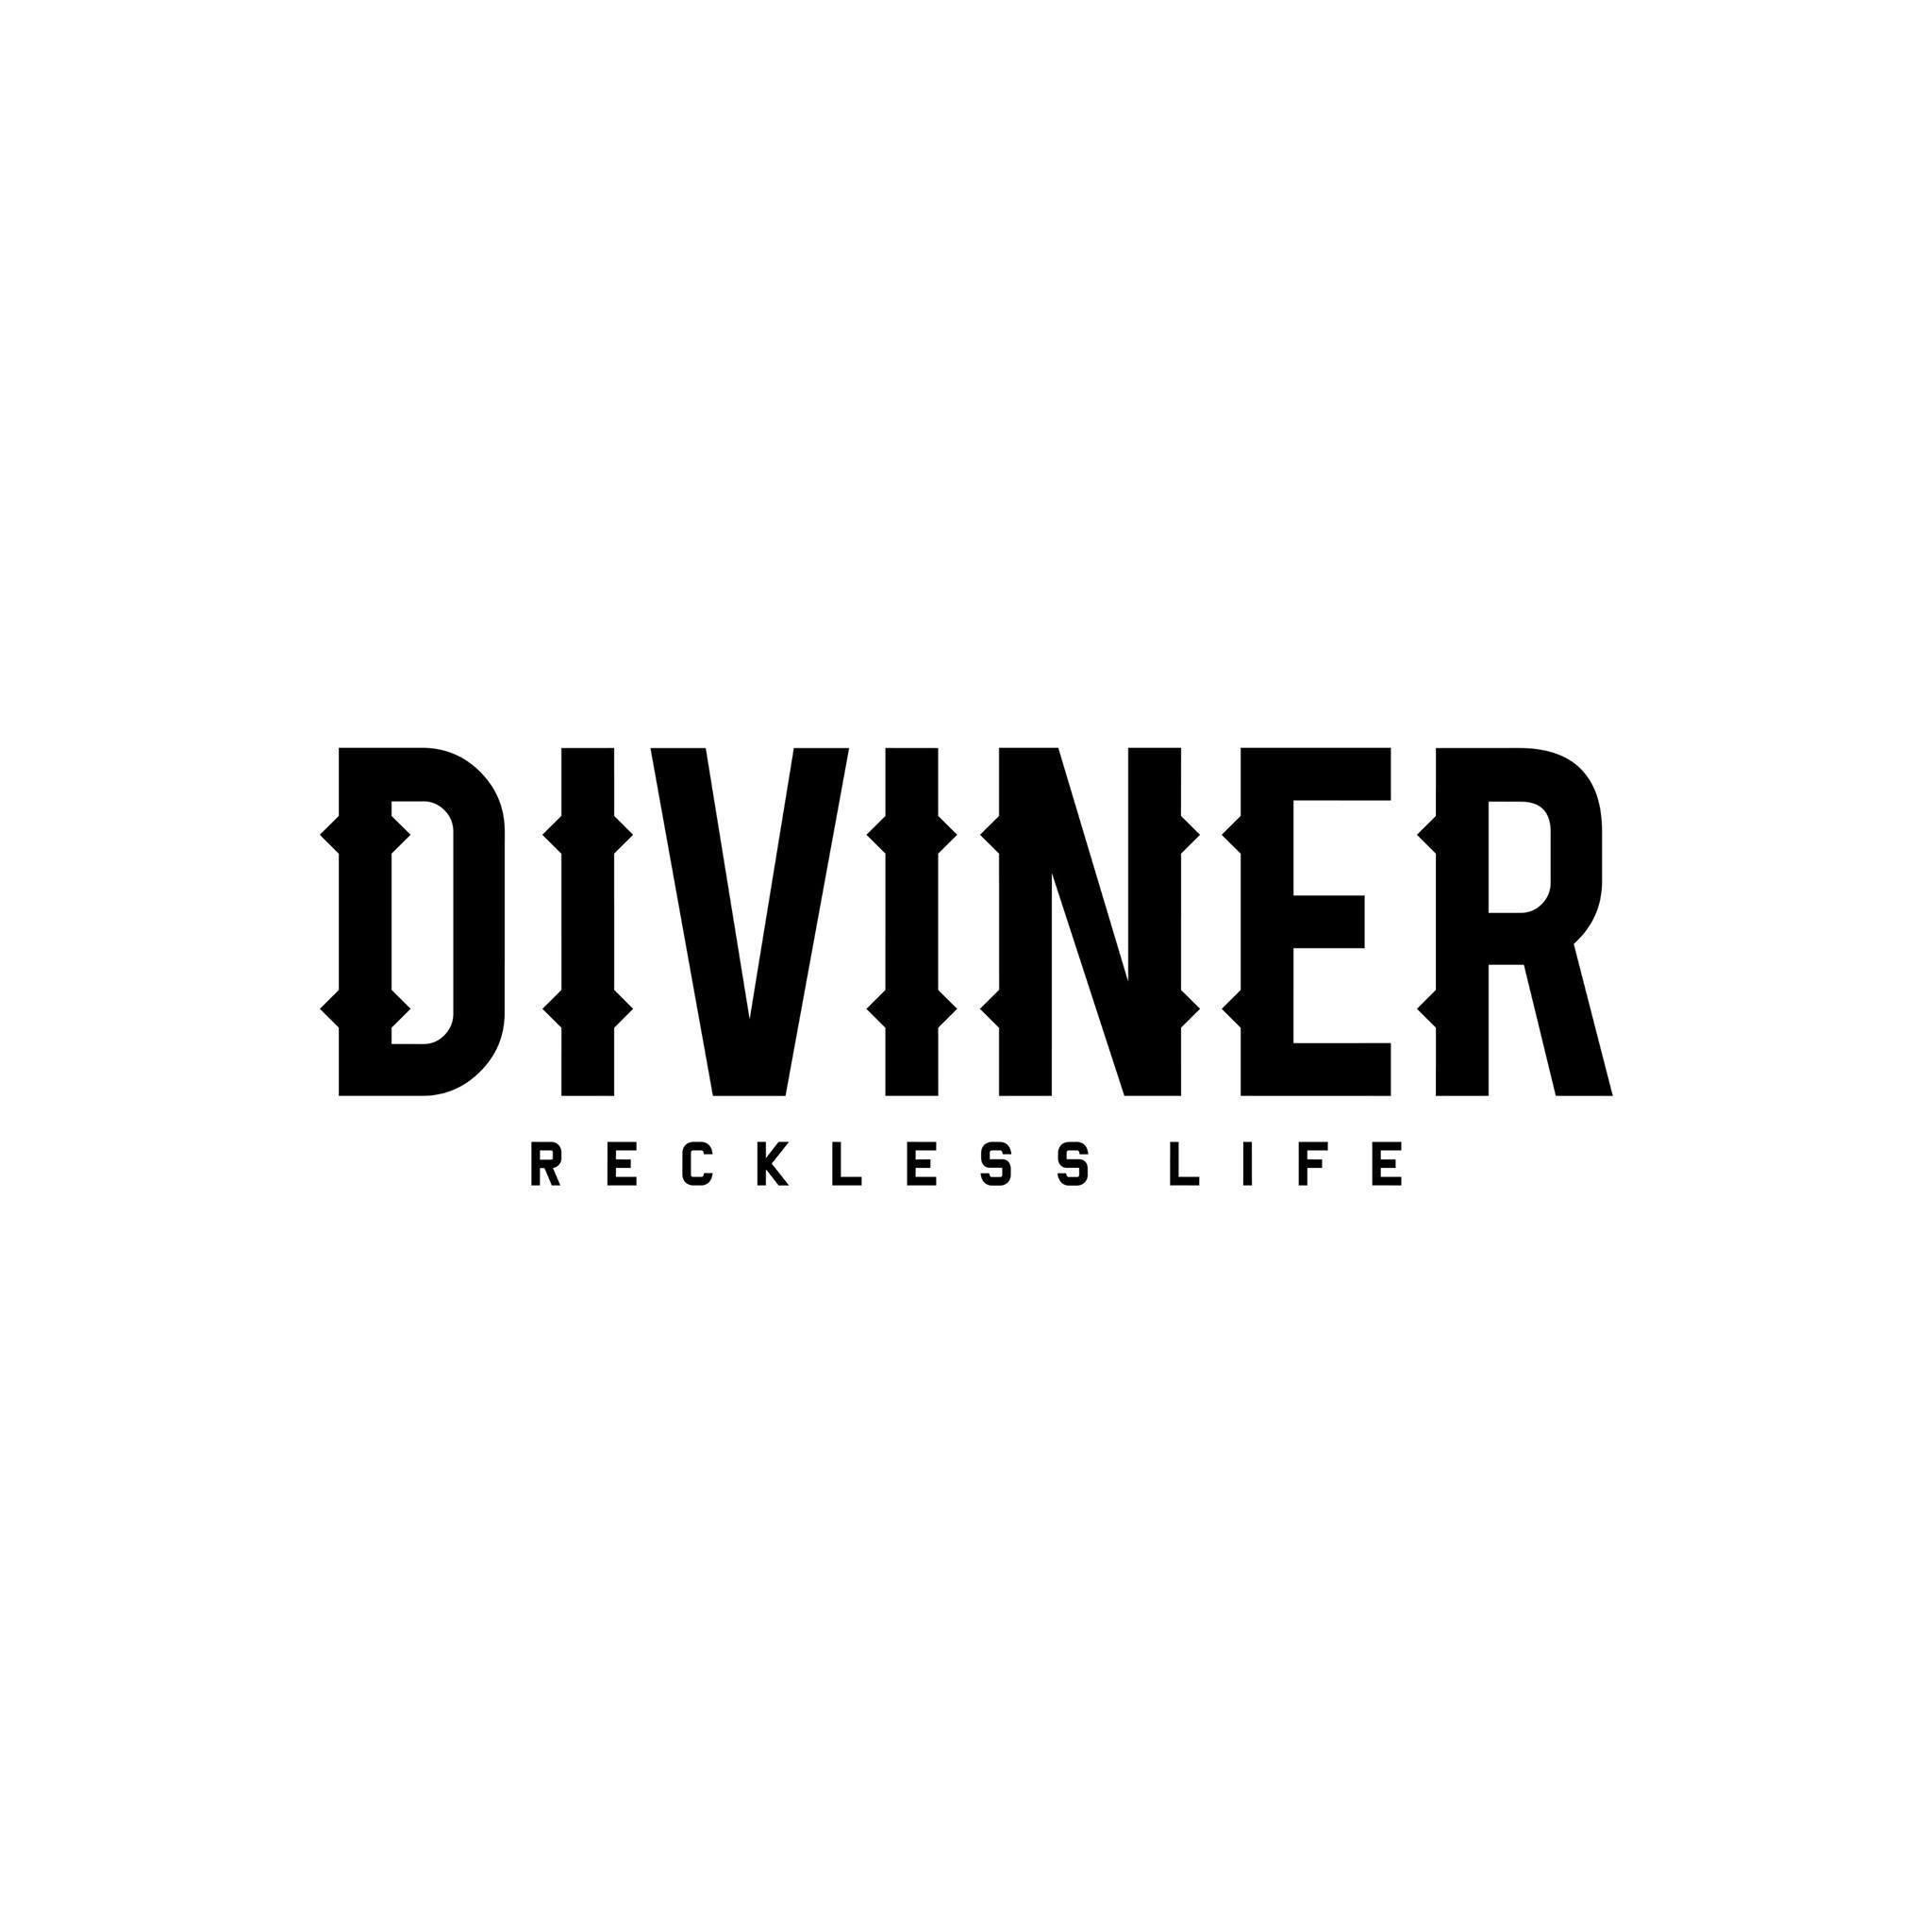 DIVINER(ディバイナー)大阪店 - Clothing Store - 大阪市 - 06-6575-7344 Japan | ShowMeLocal.com